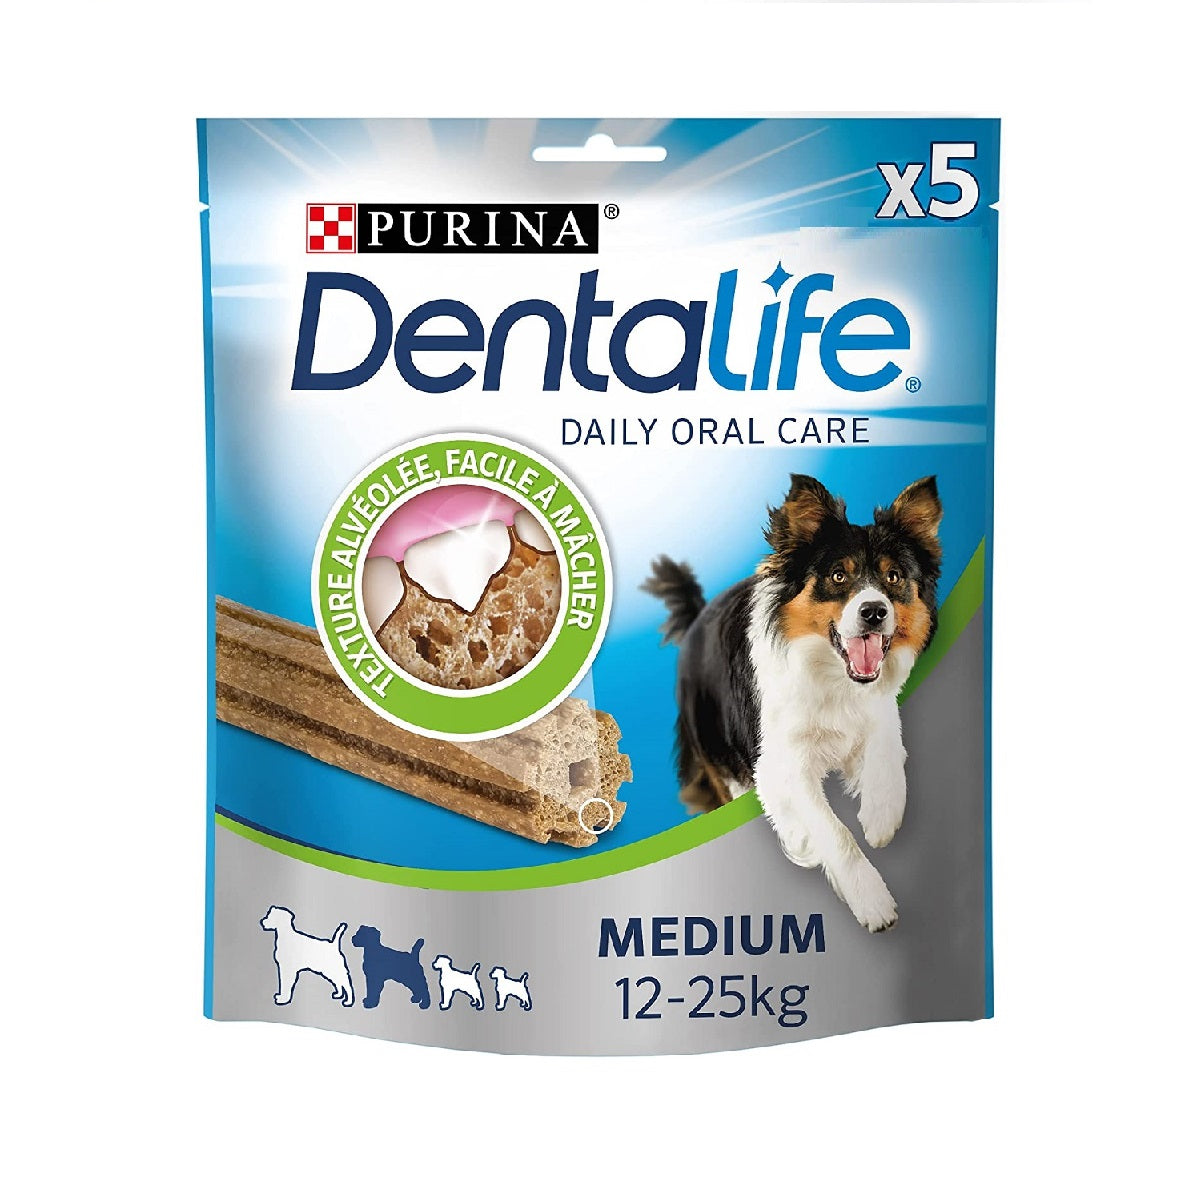 Purina - DentaLife Medium Dog